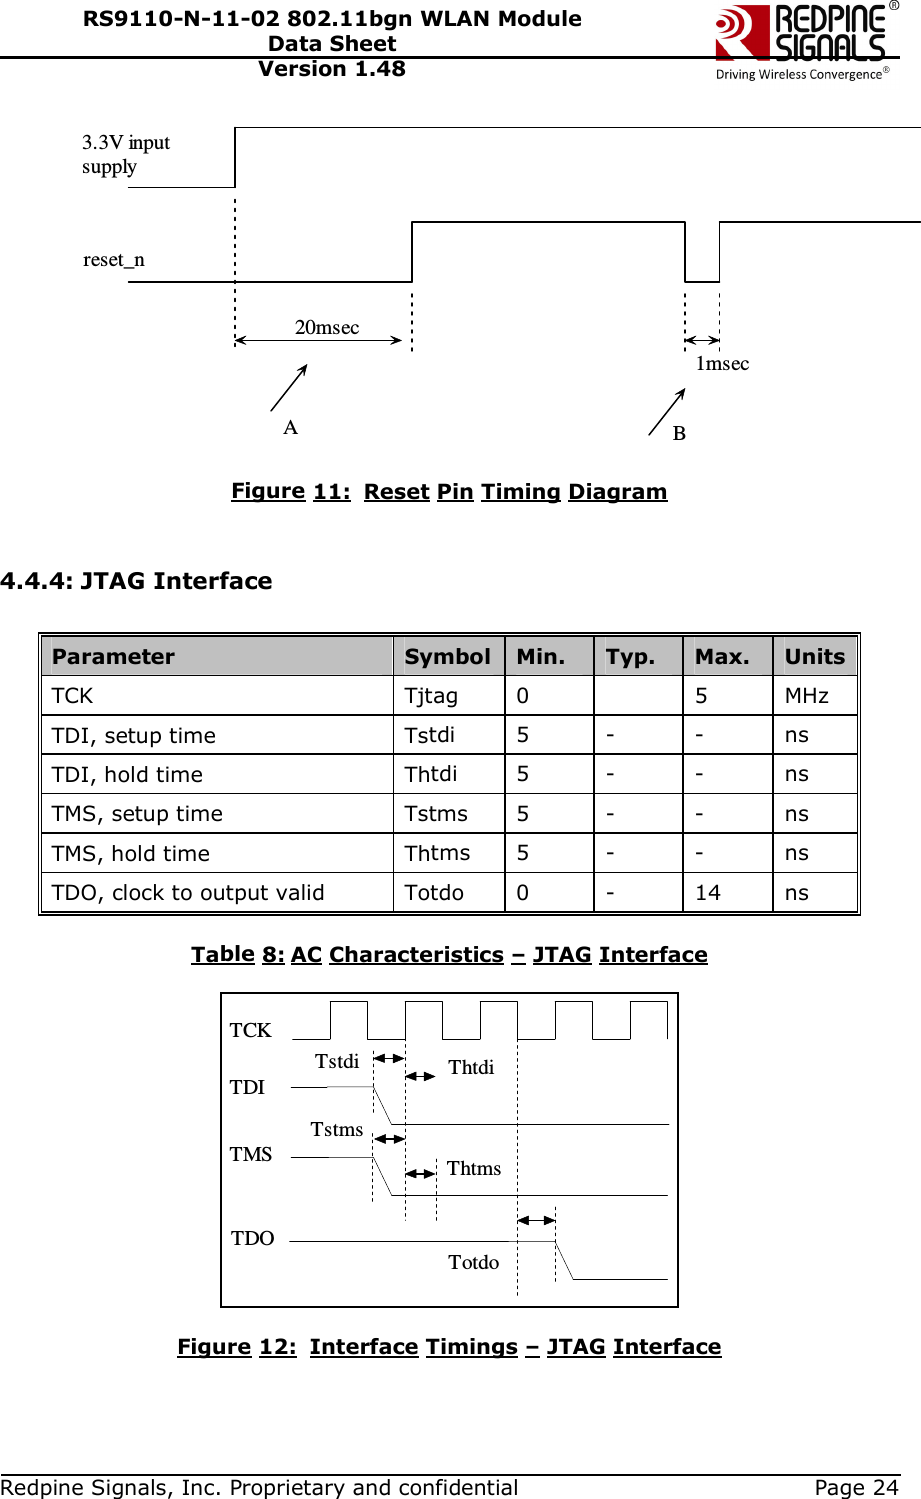   Redpine Signals, Inc. Proprietary and confidential  Page 24 RS9110-N-11-02 802.11bgn WLAN Module Data Sheet Version 1.48 20msec1msecreset_n3.3V inputsupplyAB Figure 11:  Reset Pin Timing Diagram   4.4.4: JTAG Interface  Parameter  Symbol Min.  Typ.  Max.  Units TCK  Tjtag  0    5  MHz TDI, setup time   Tstdi  5  -  -  ns TDI, hold time  Thtdi  5  -  -  ns TMS, setup time   Tstms  5  -  -  ns TMS, hold time  Thtms  5  -  -  ns TDO, clock to output valid  Totdo  0  -  14  ns  Table 8: AC Characteristics – JTAG Interface  TstdiTstmsTotdoThtdiThtmsTCKTDITMSTDO  Figure 12:  Interface Timings – JTAG Interface                            